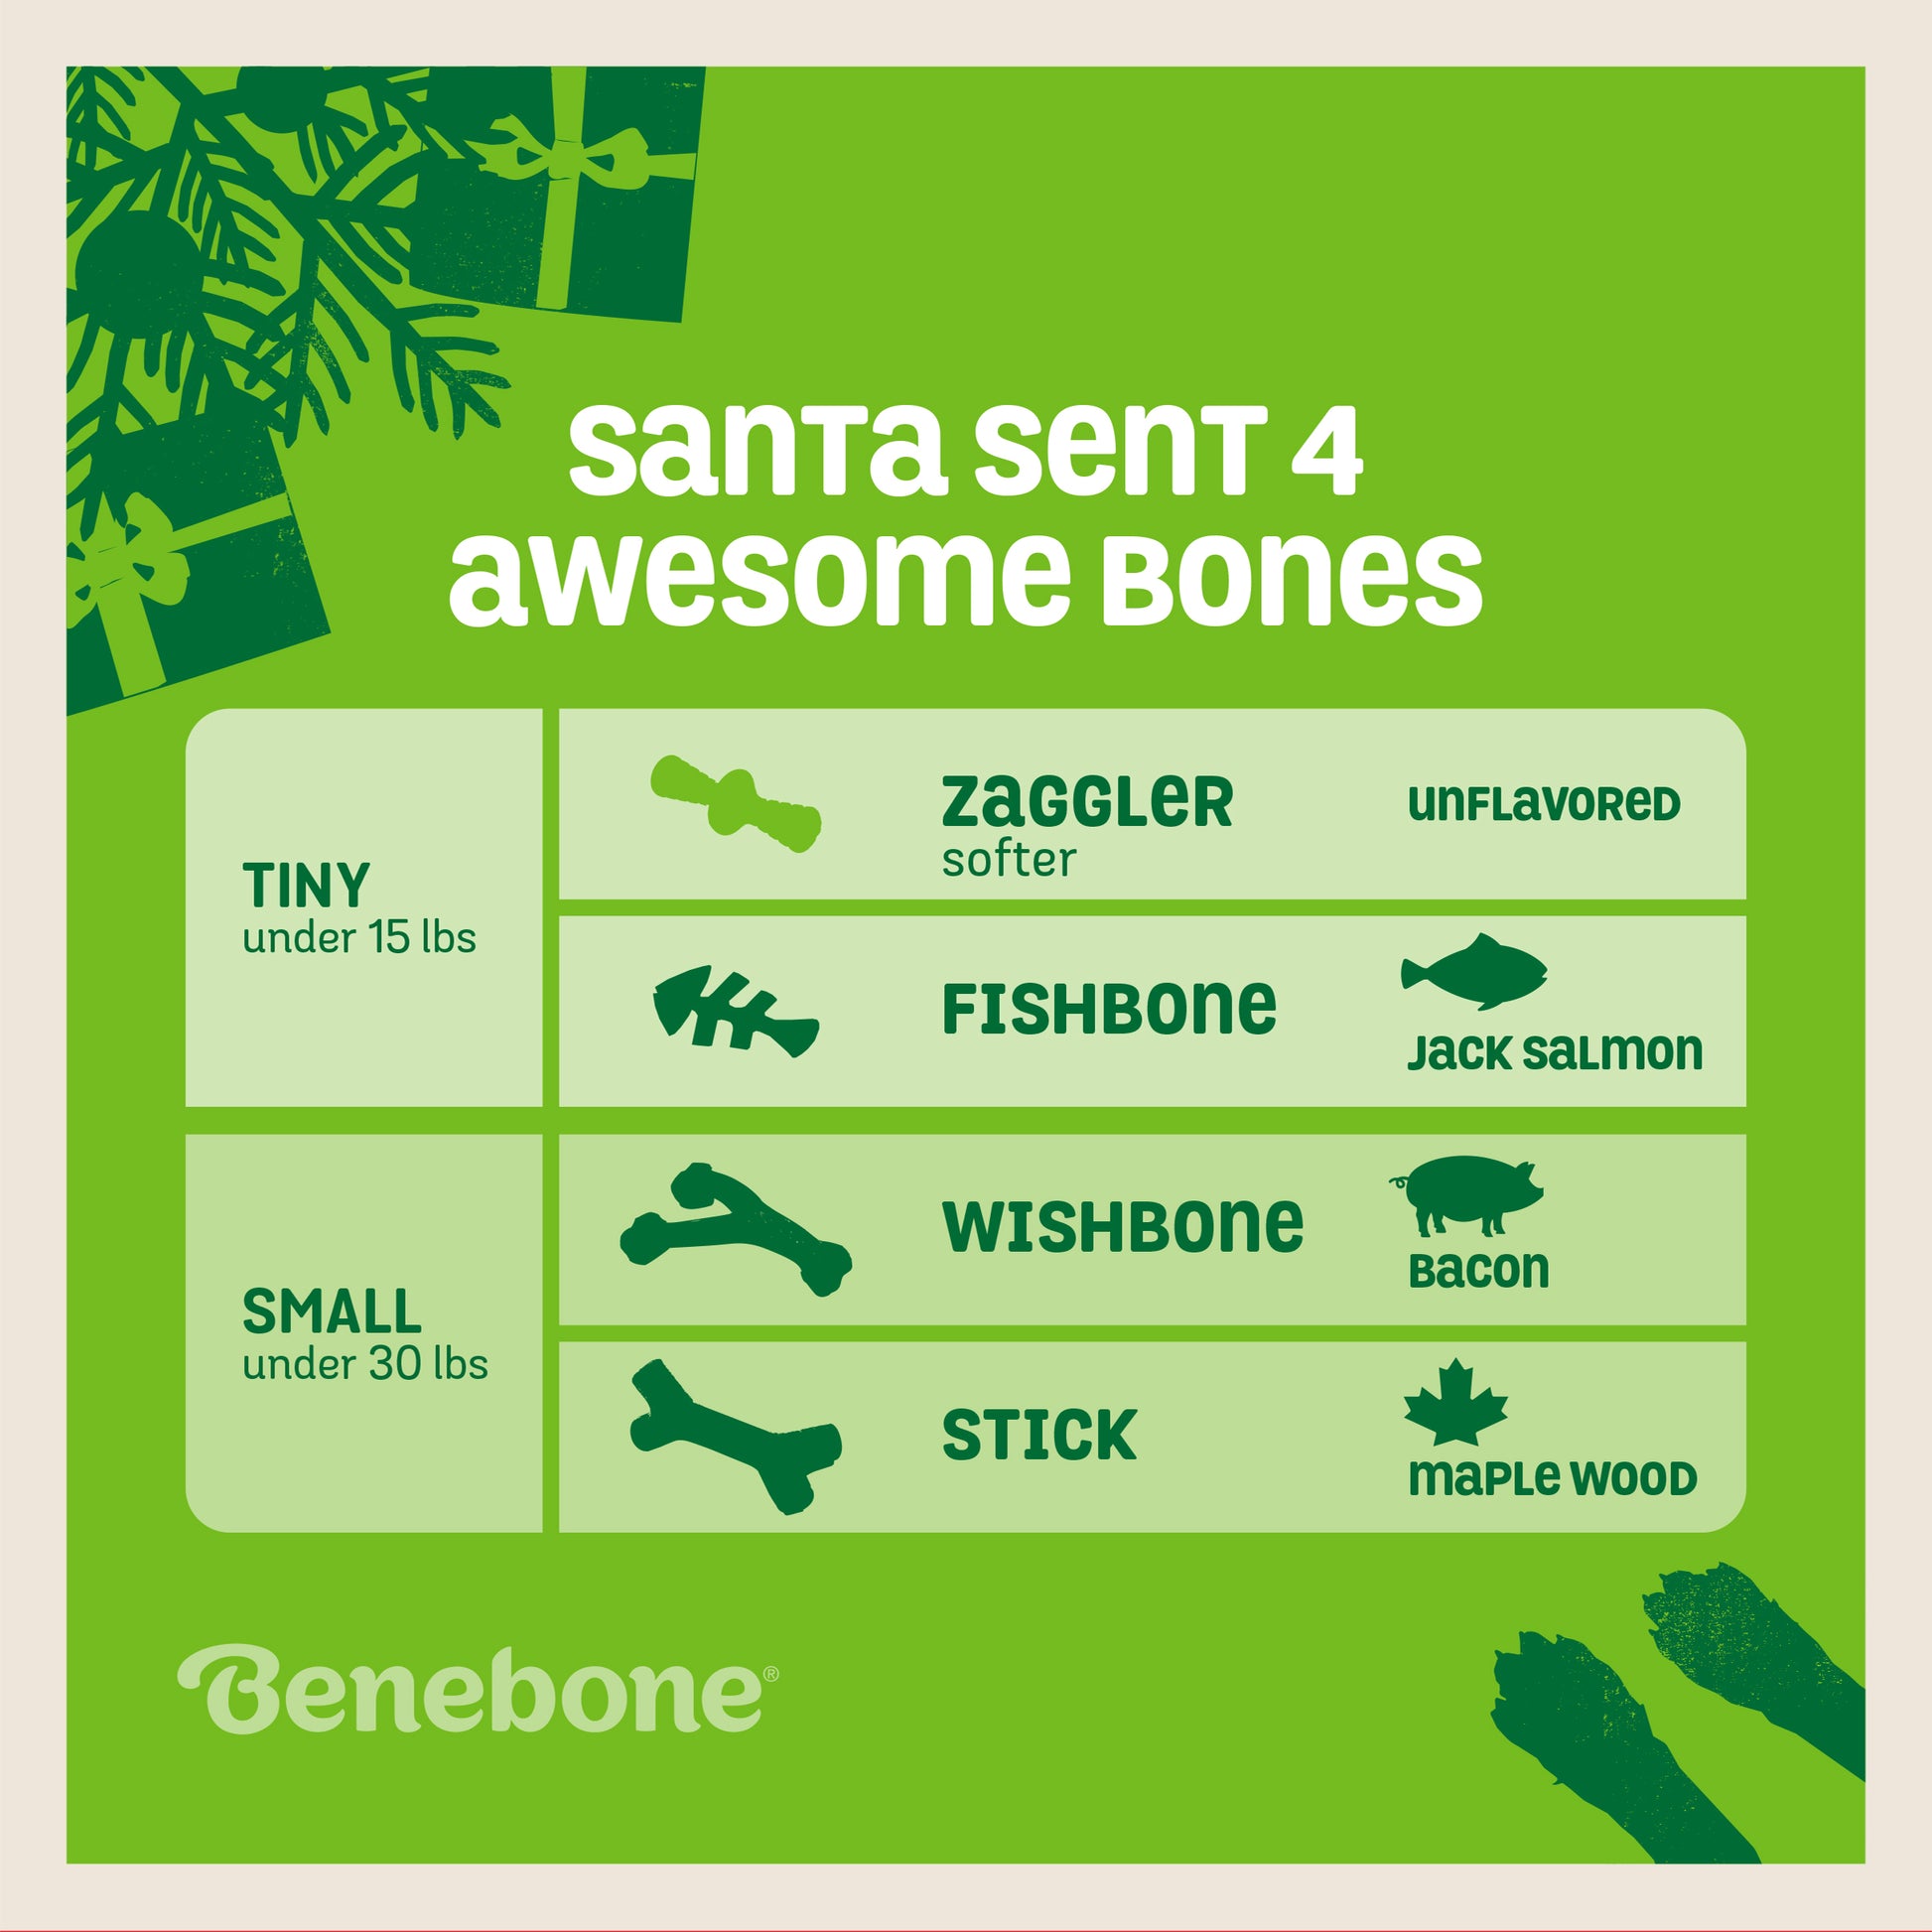 Image with text Santa sent 4 awesome bones. Tiny zaggler softer, fishbone. Small wishbone bacon, maplewood stick